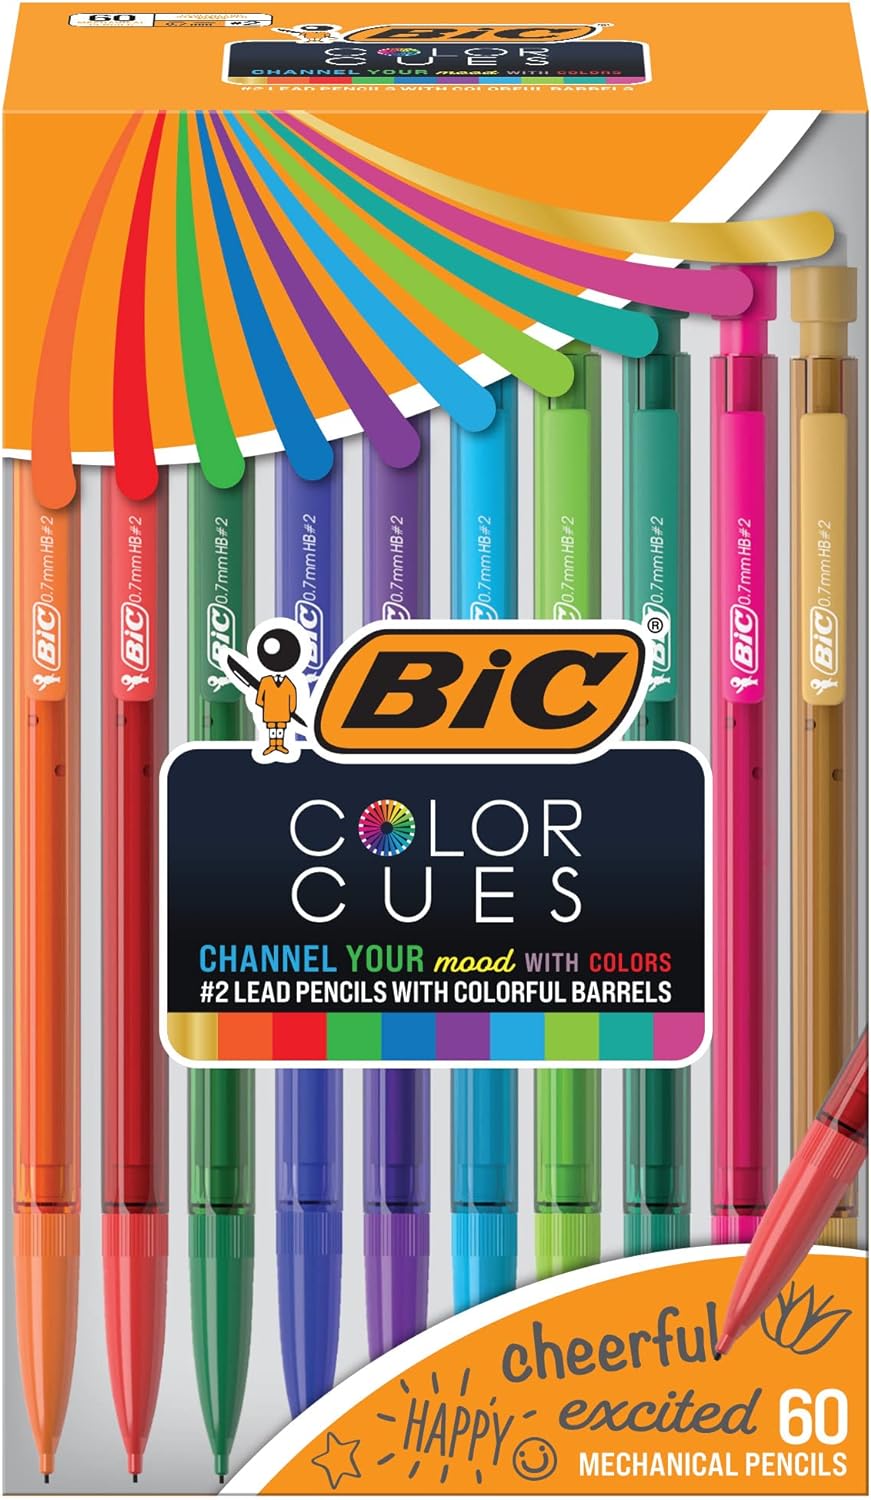 BIC Color Cues Mechanical Pencil Set (MPUA60-AST), 60-Count Pack, Black, Fun Color Pencils for School, Perfect for School Supplies